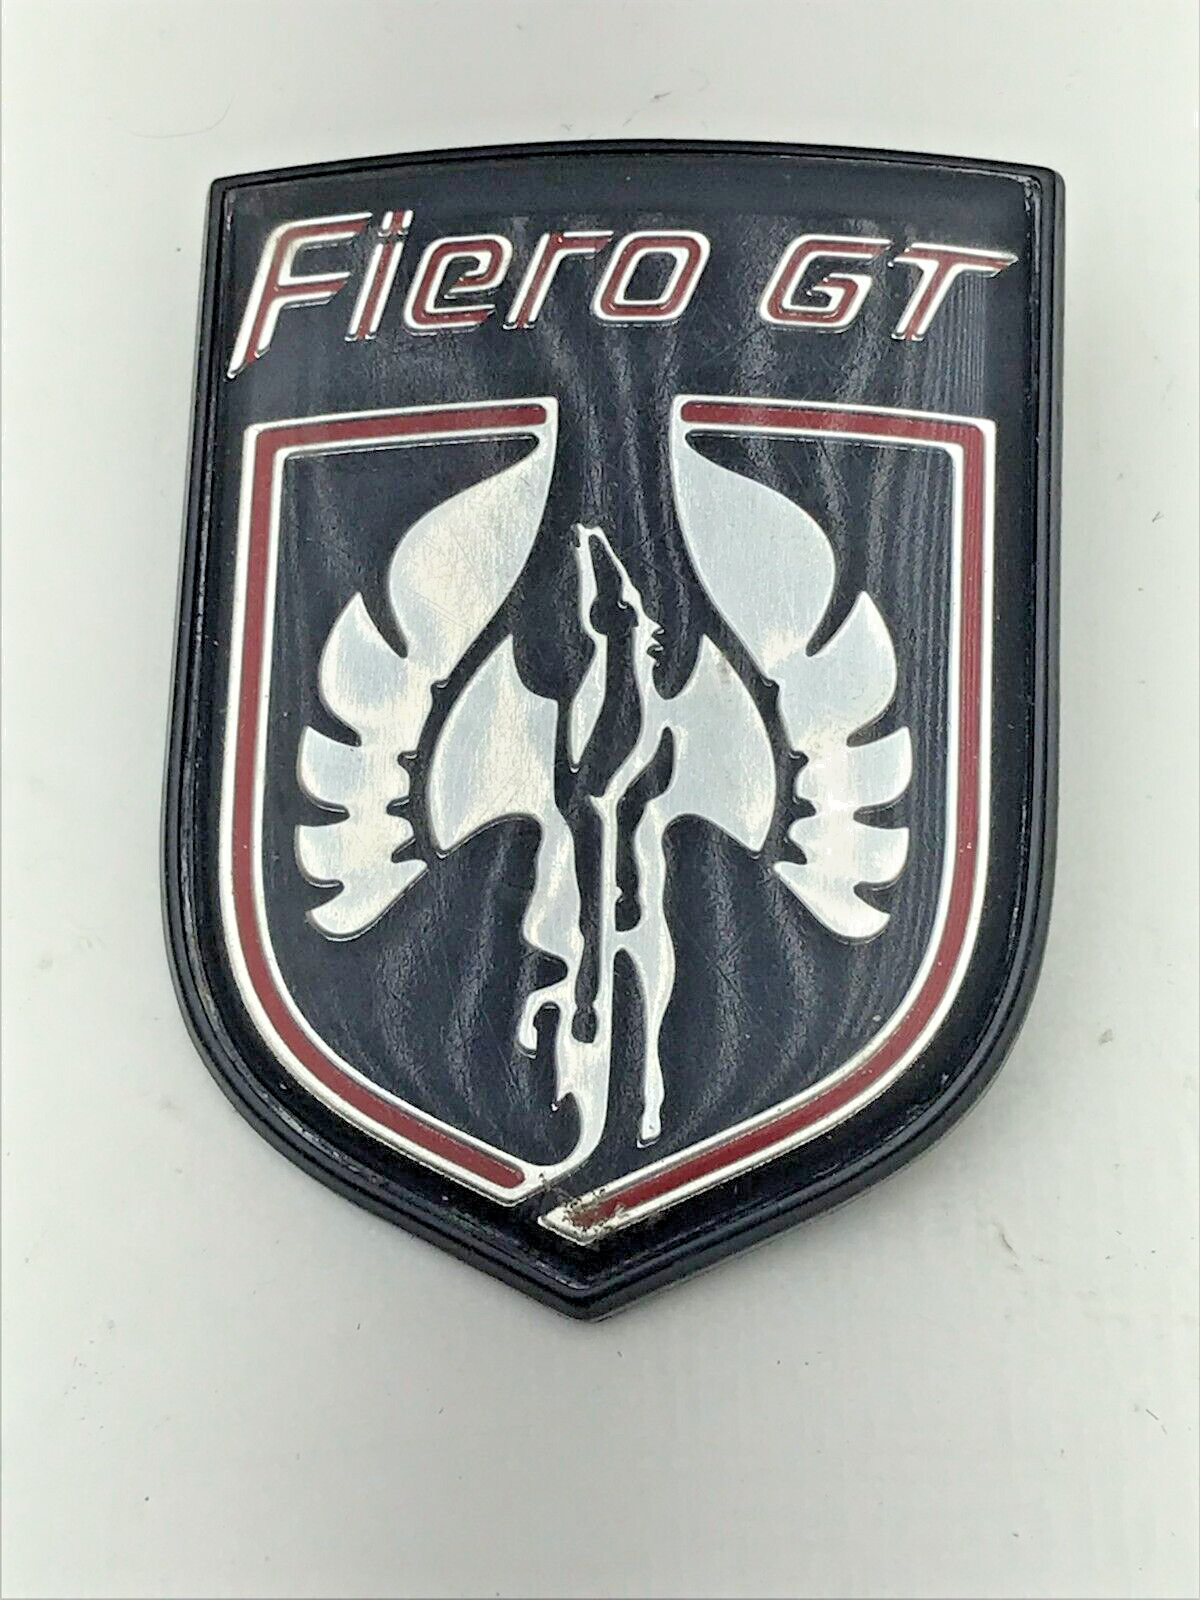 Pontiac Fiero GT Front Header Emblem Nose Badge Trim Molding Ornament